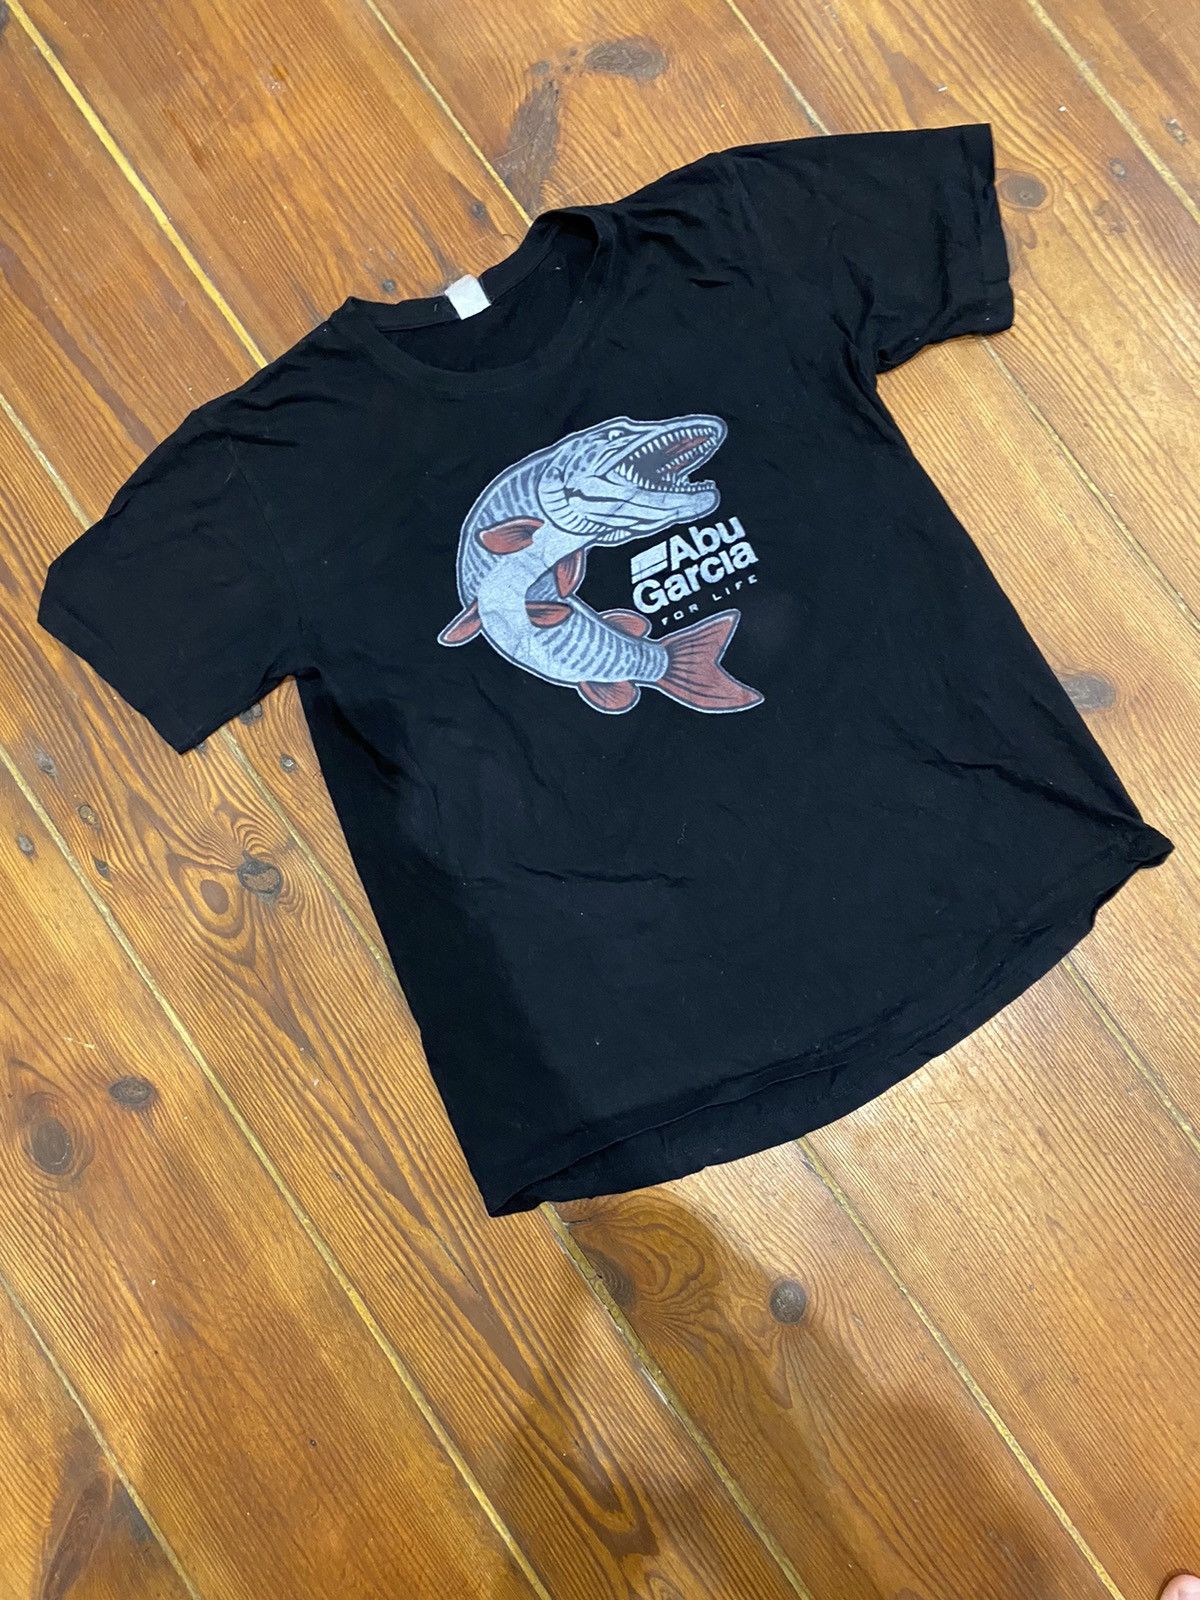 Vintage New Zealand Fishing T-shirt Size XL